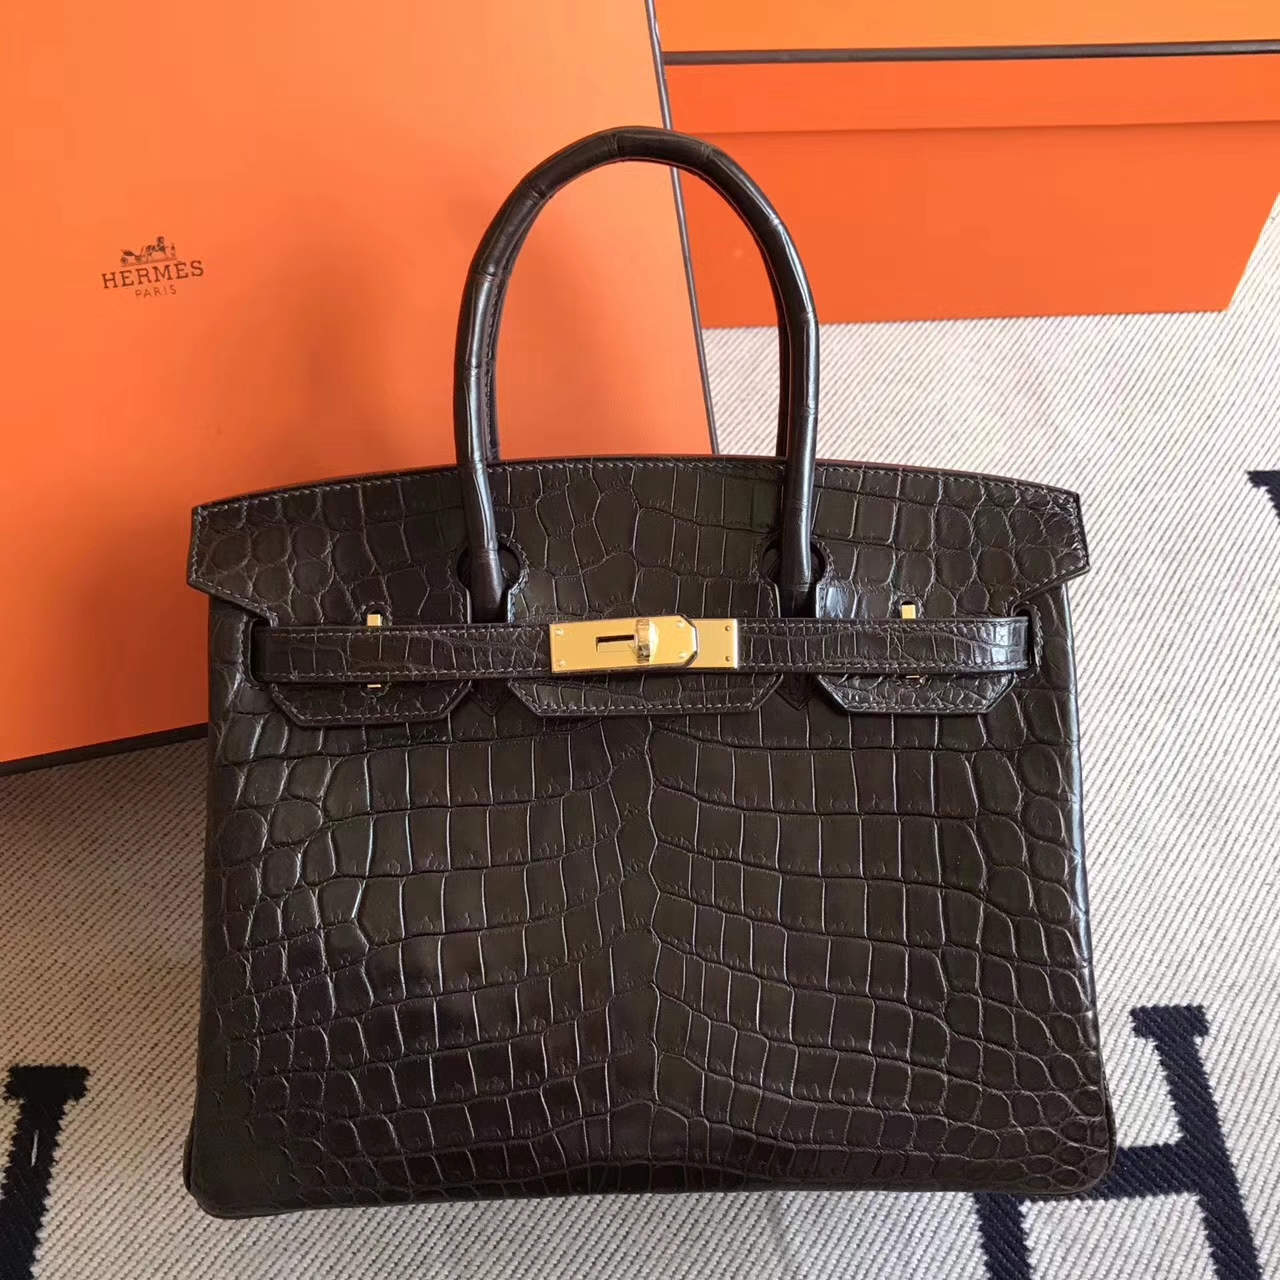 Fashion Hermes Crocodile Matt Birkin30cm Handbag in Chocolate Color ...